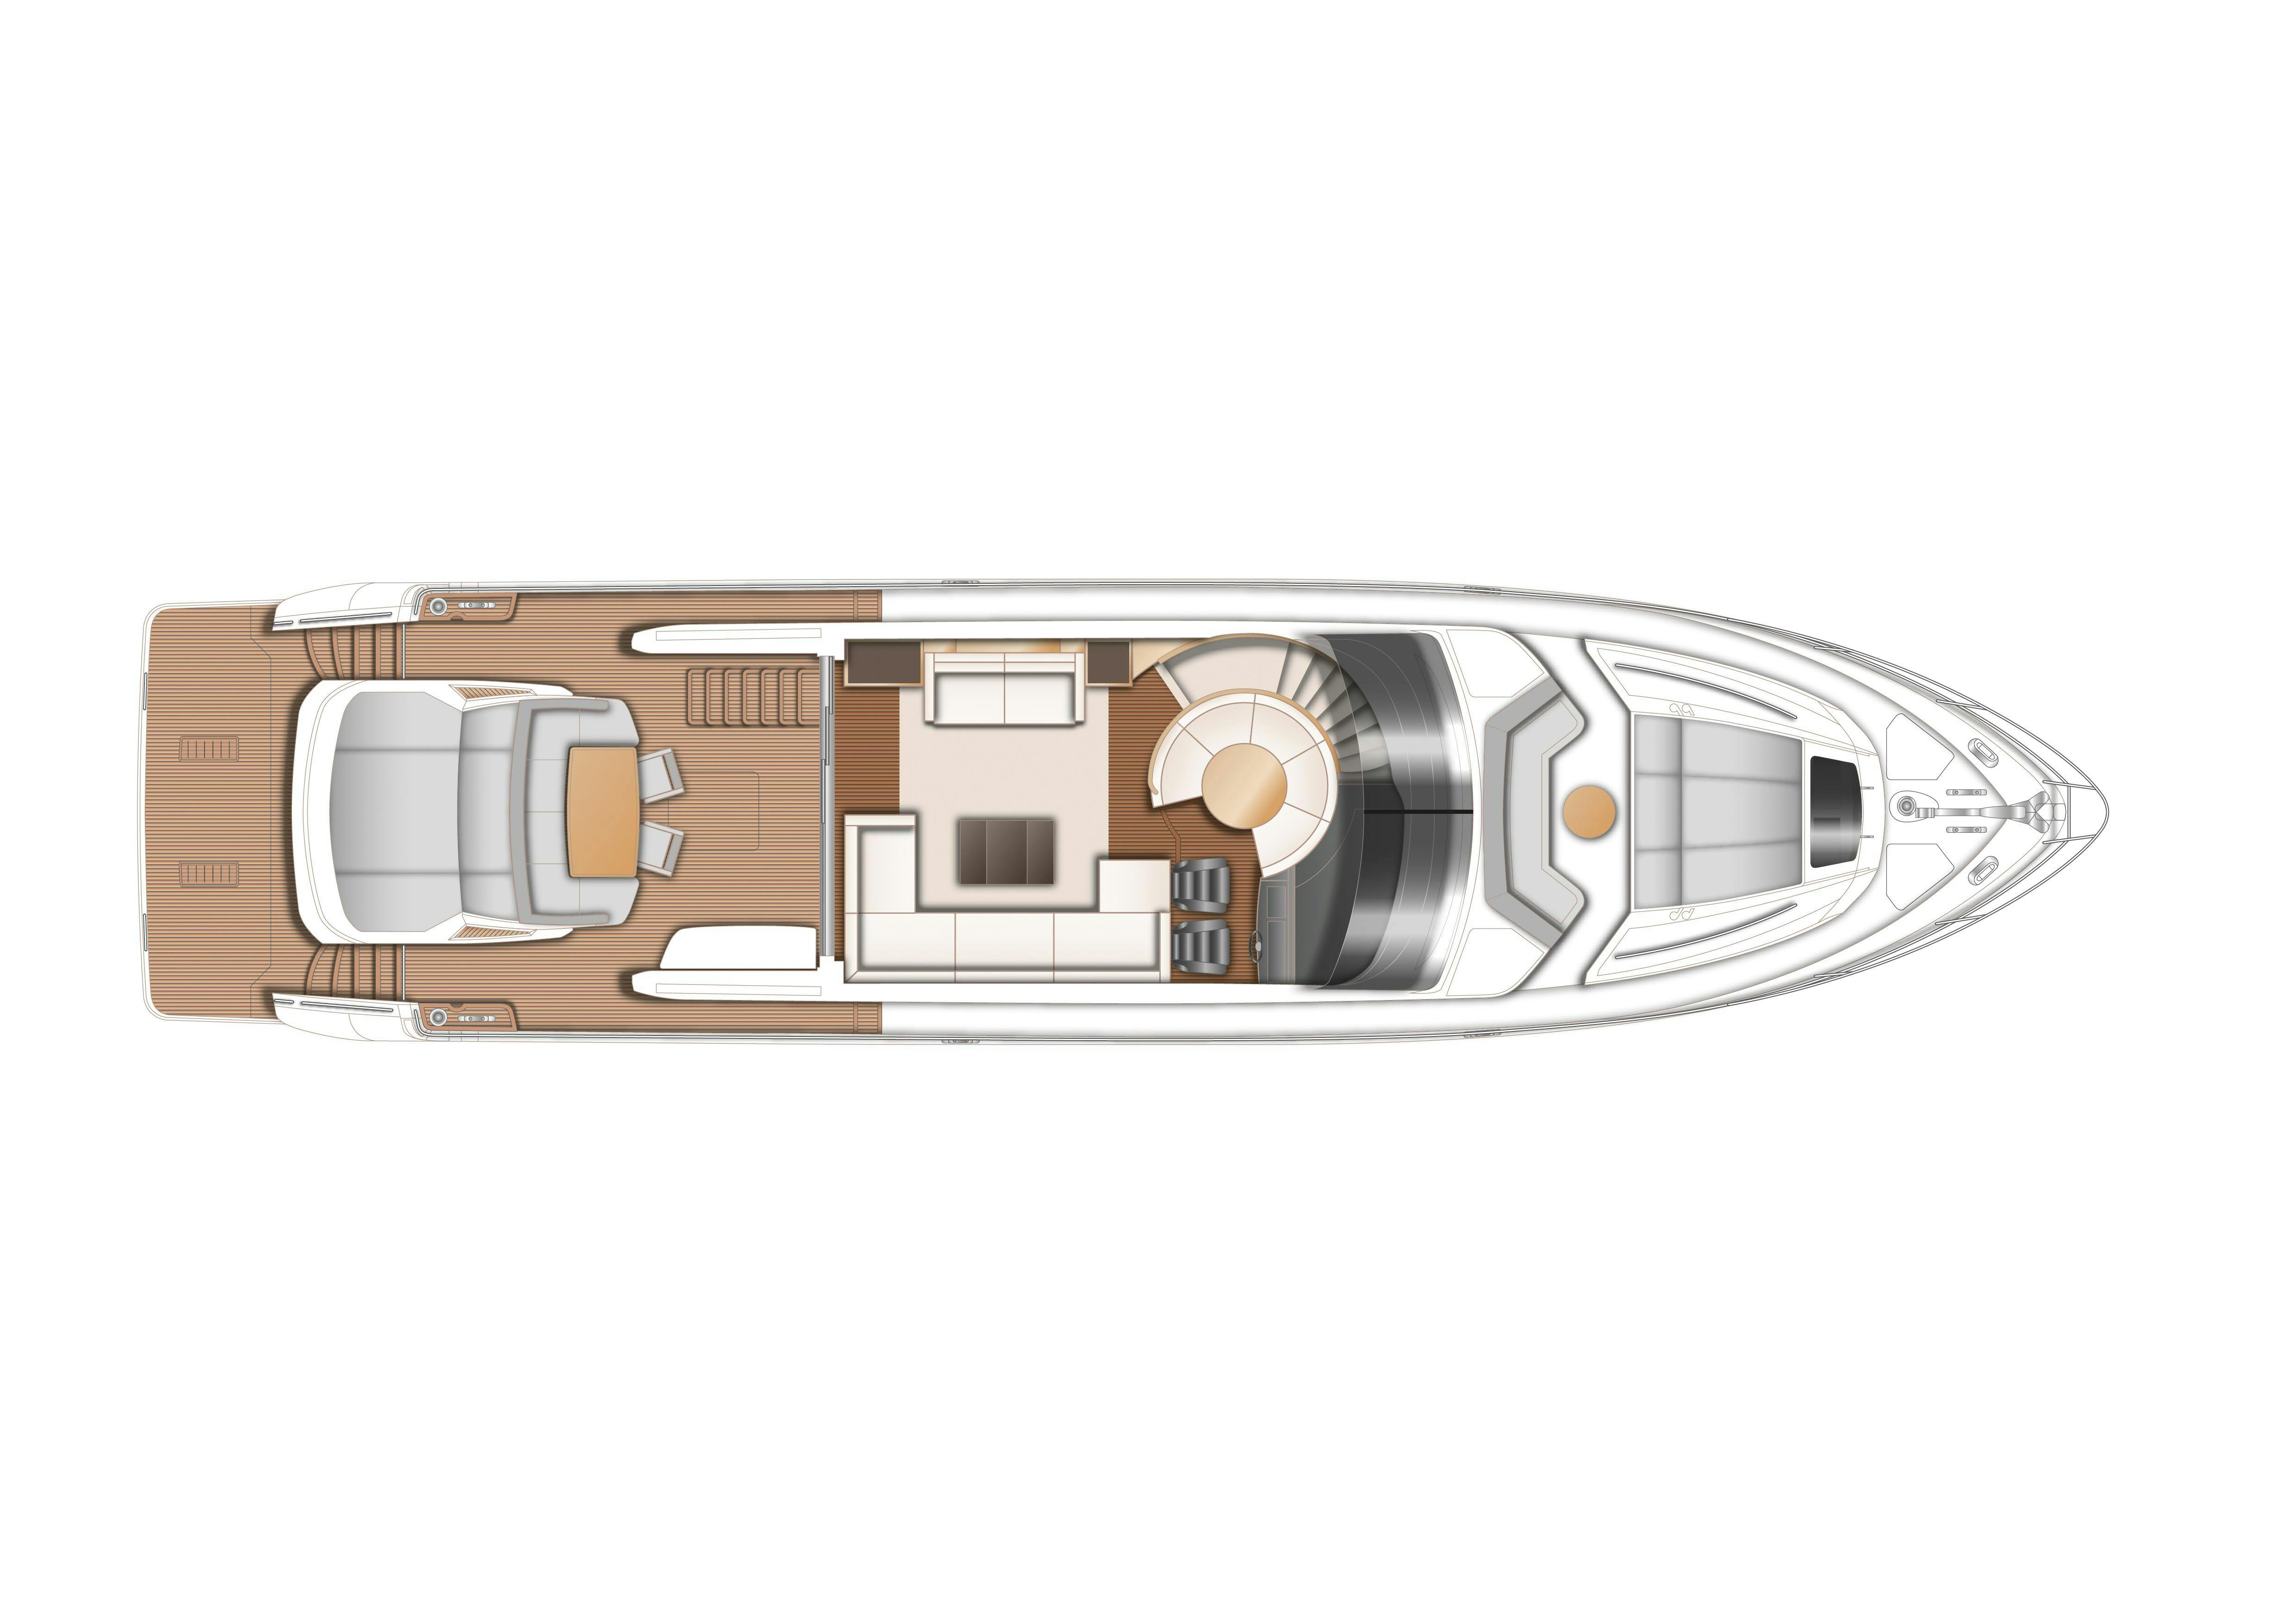 Manufacturer Provided Image: Princess S72 Upper Deck Layout Plan